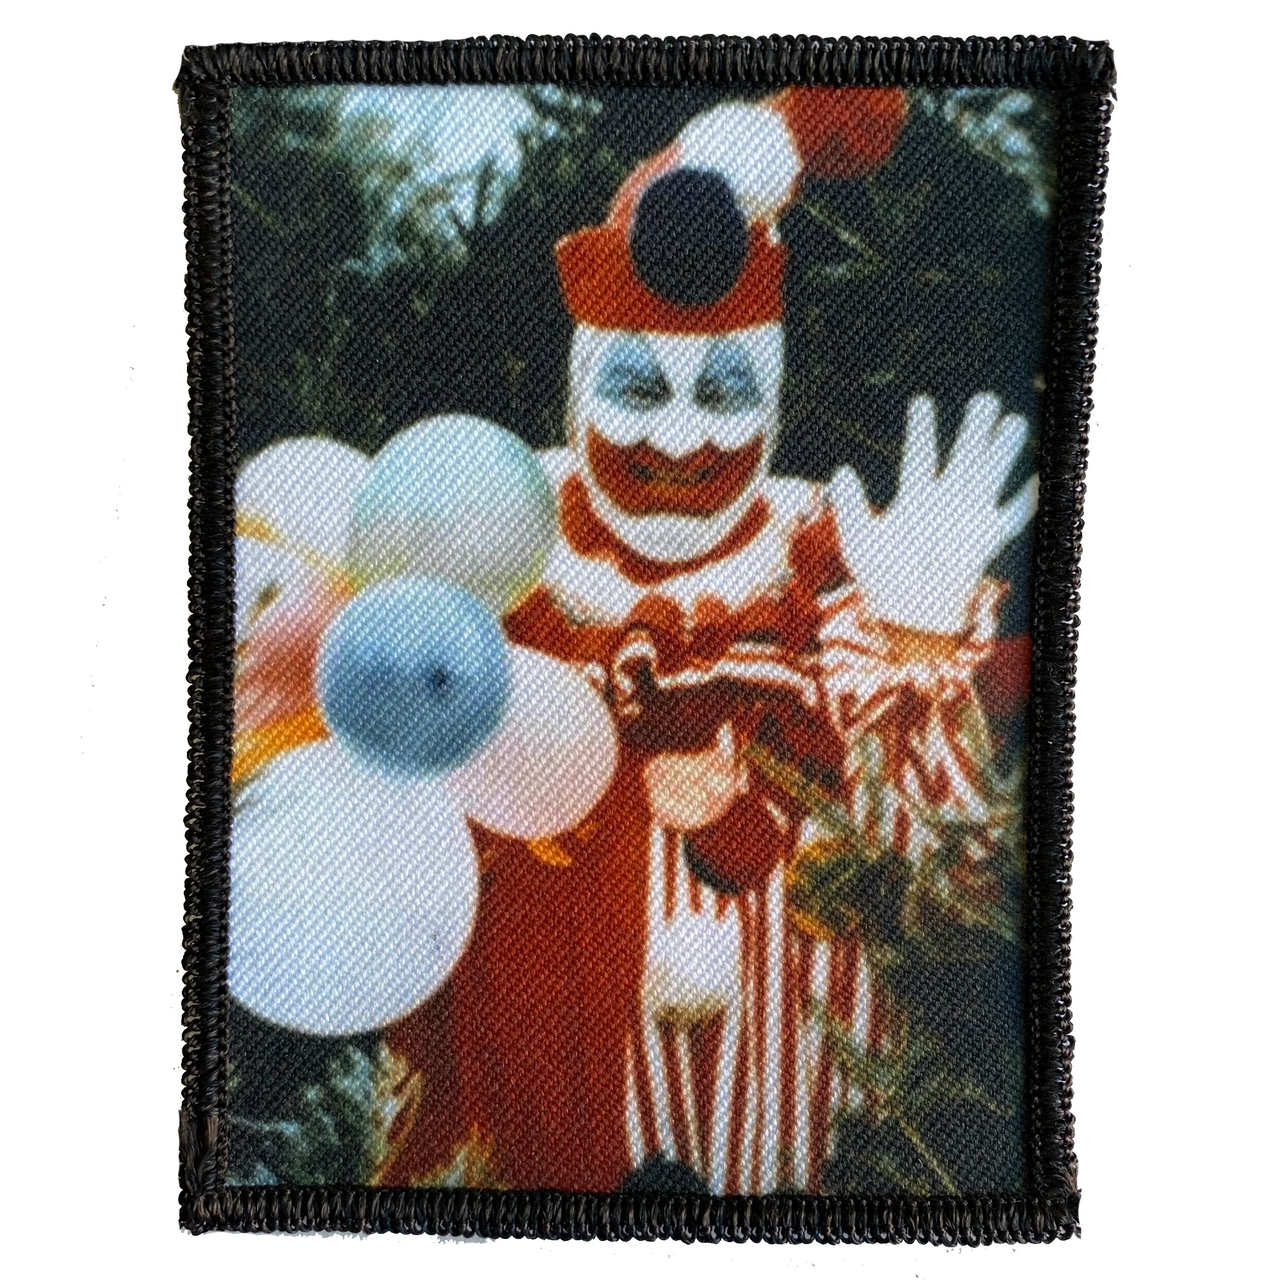 Pogo The Clown Patch